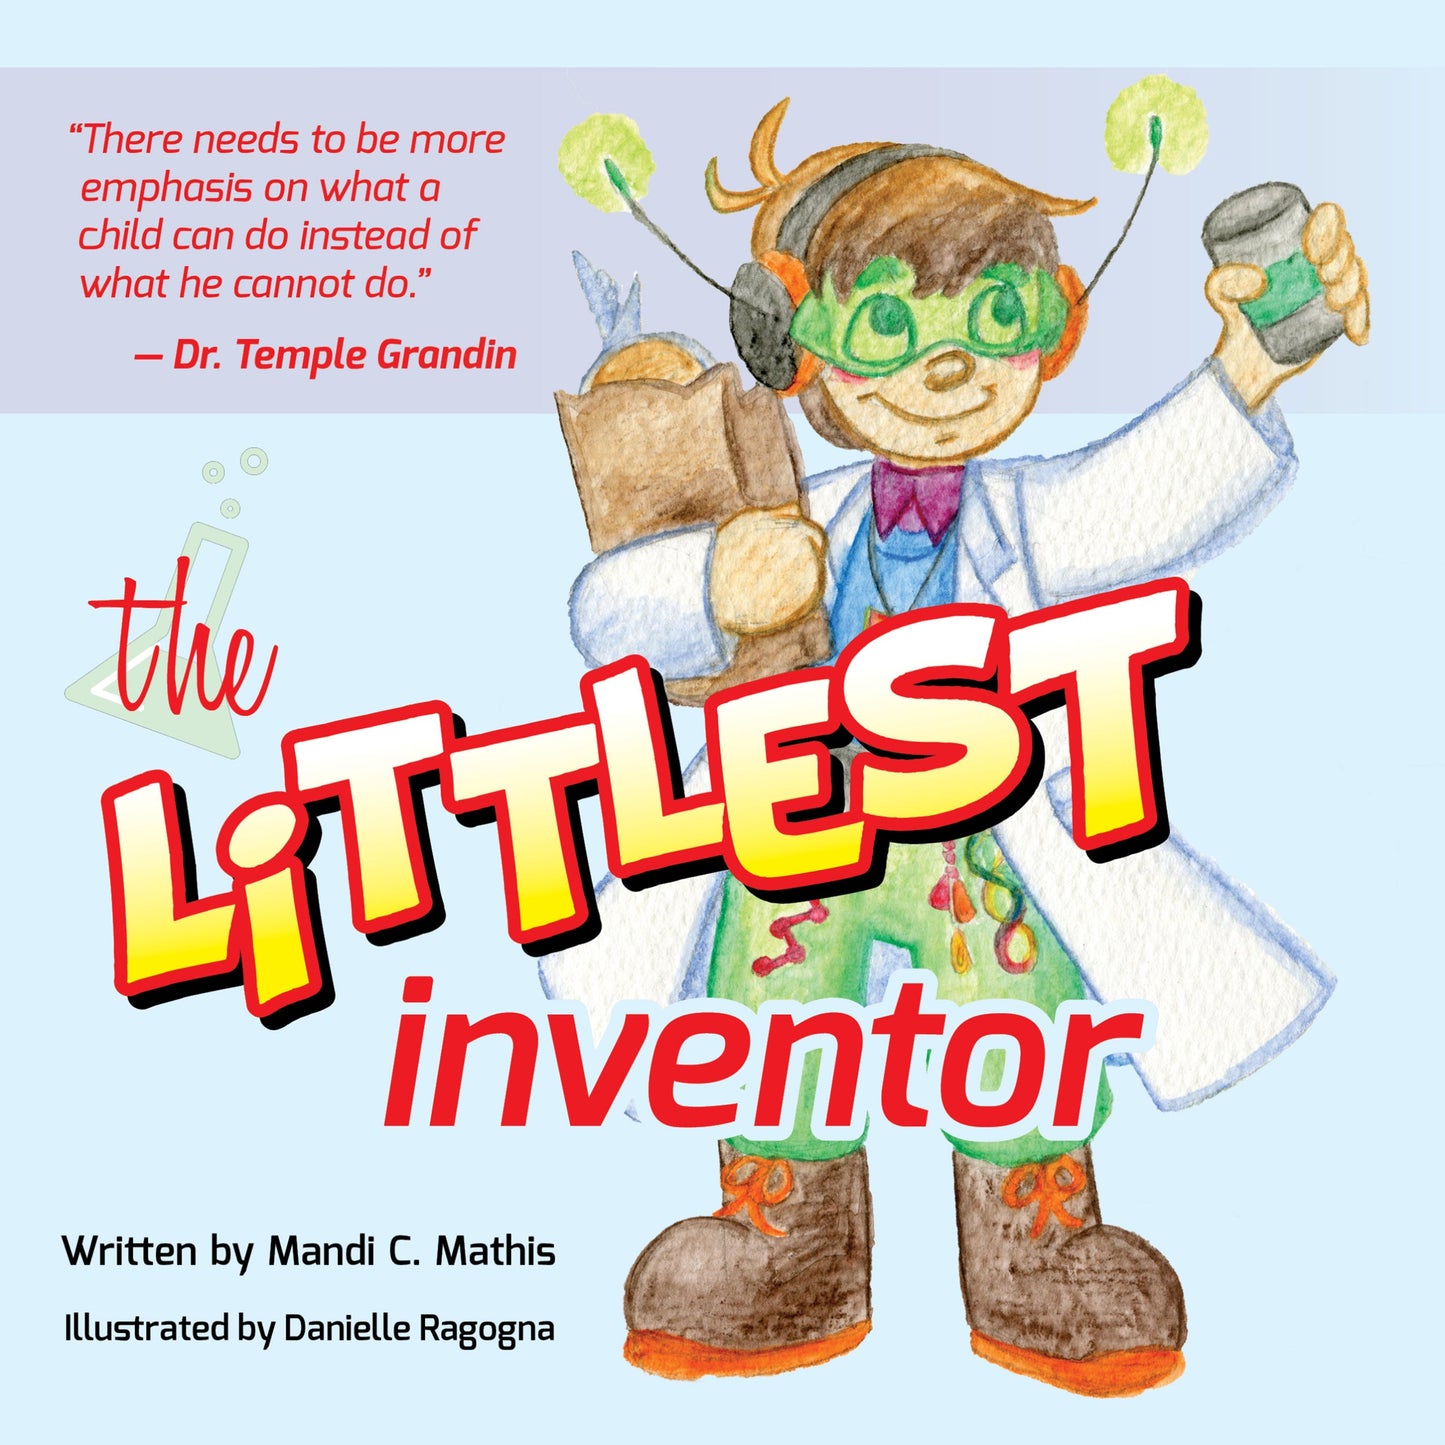 Littlest Inventor, The